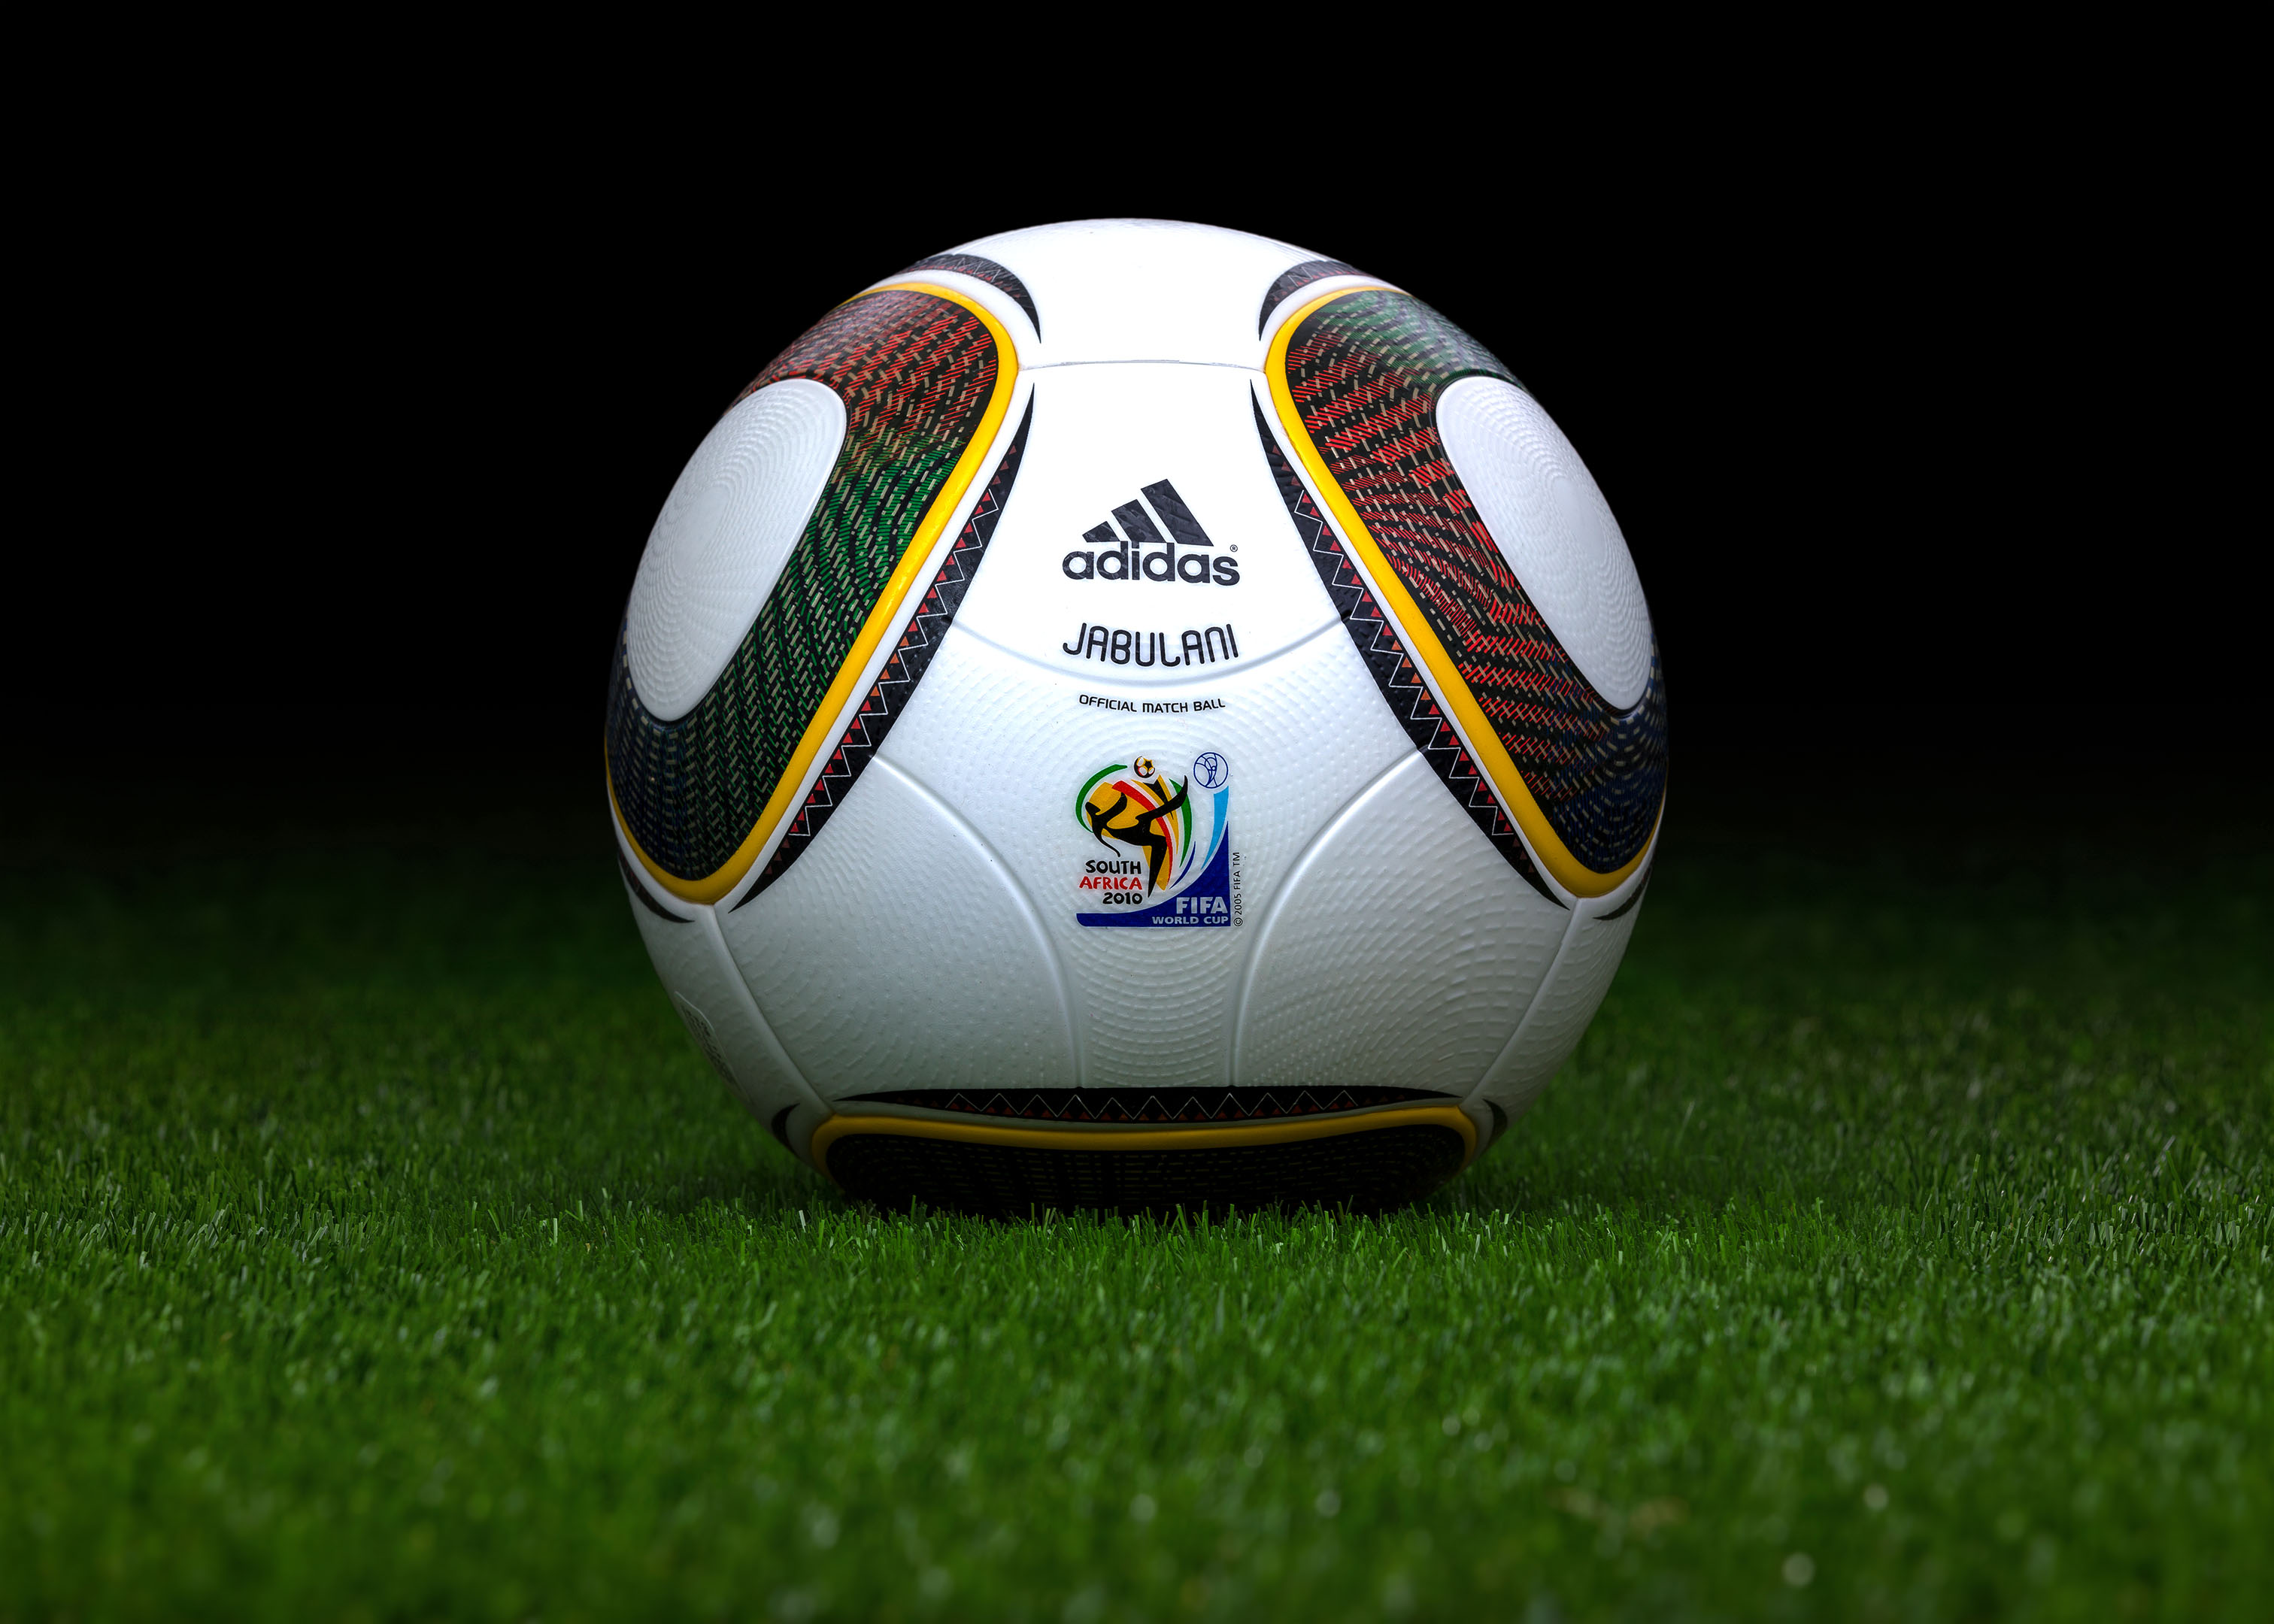 Made in China match ball FIFA World Cup 2010 South Africa Adidas Jabulani